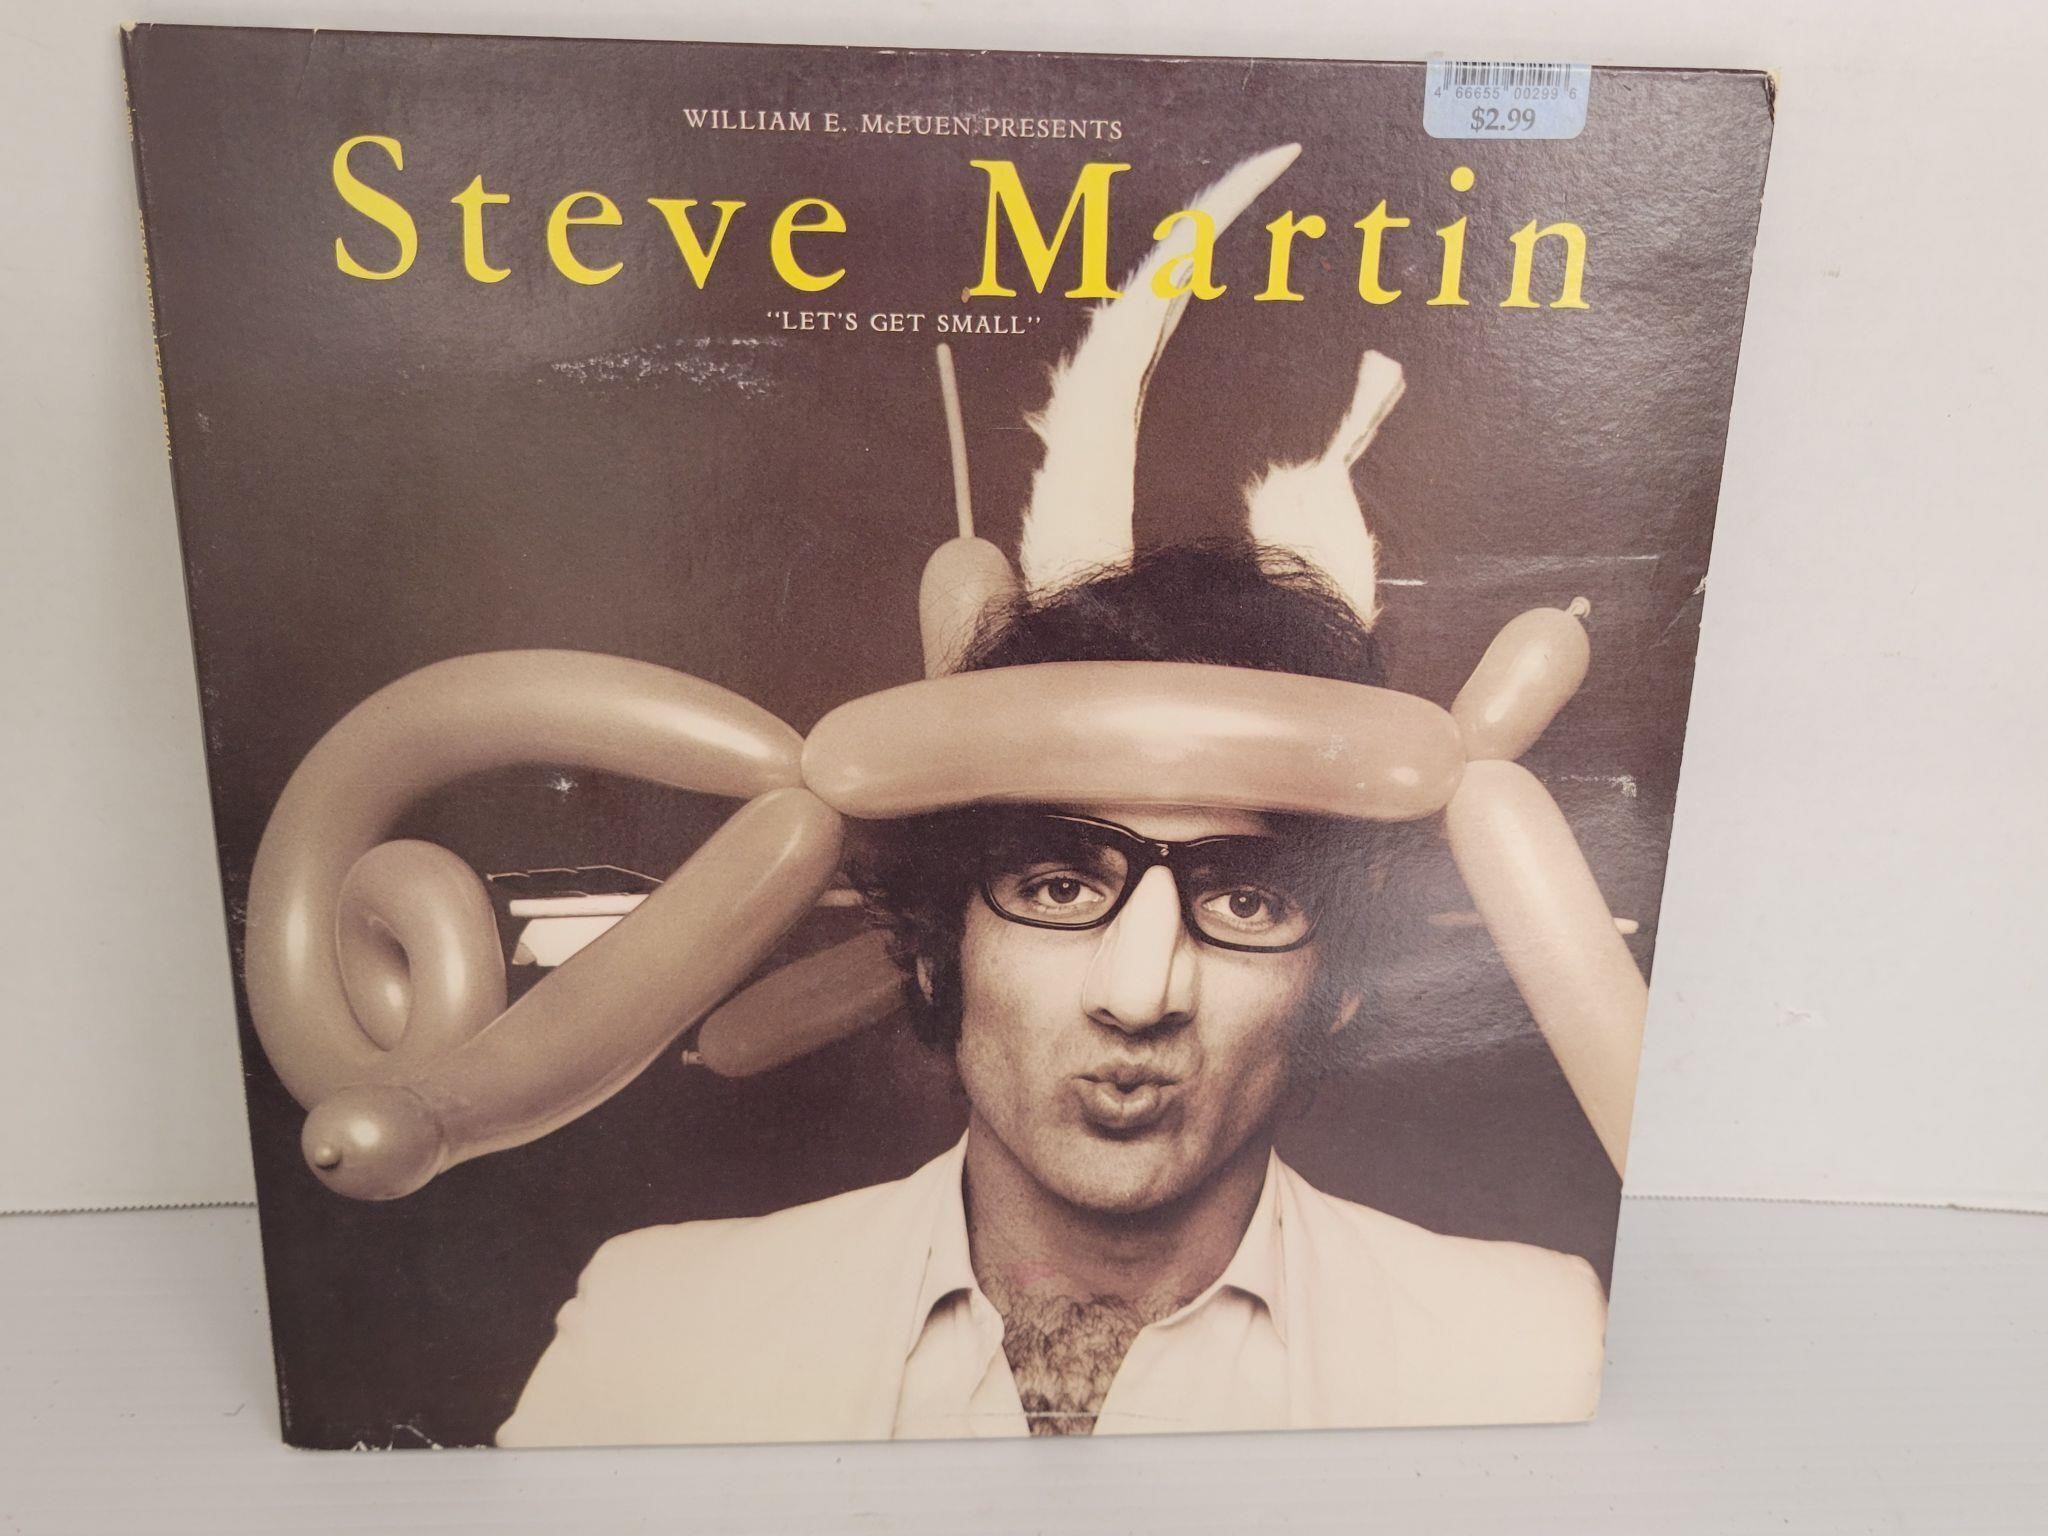 Steve Martin record